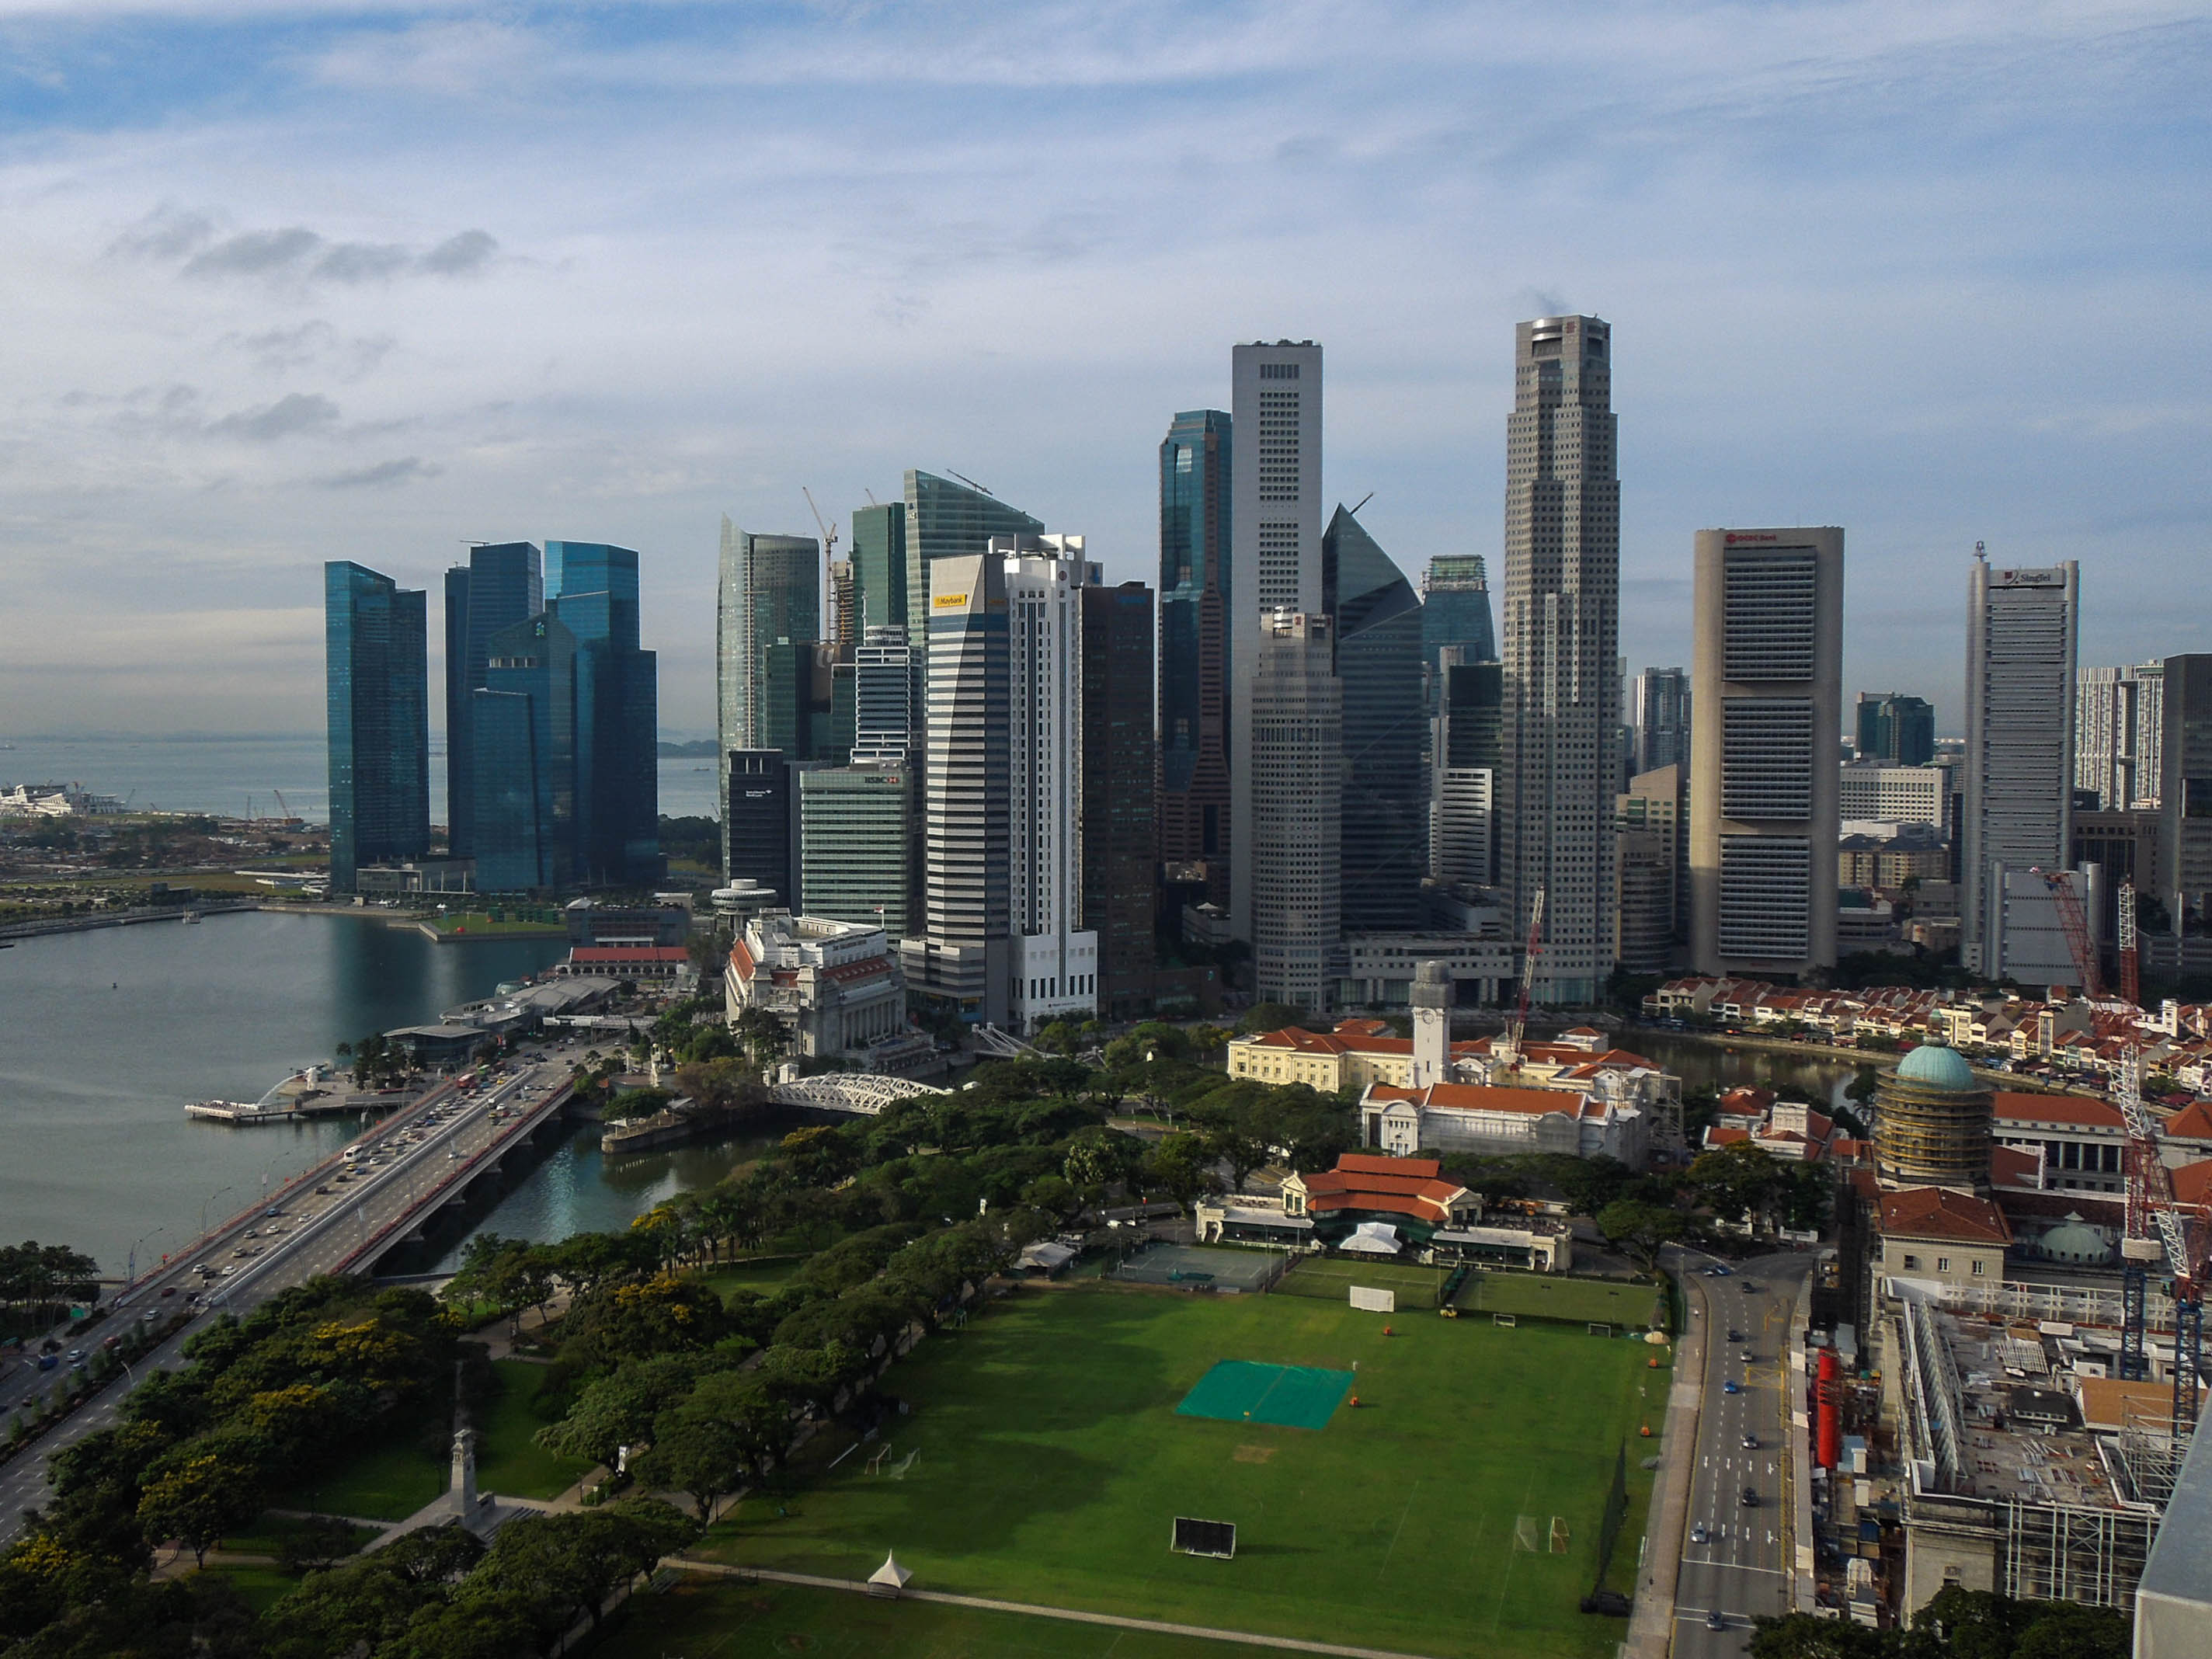 Singapore financial district by Rich Krebs